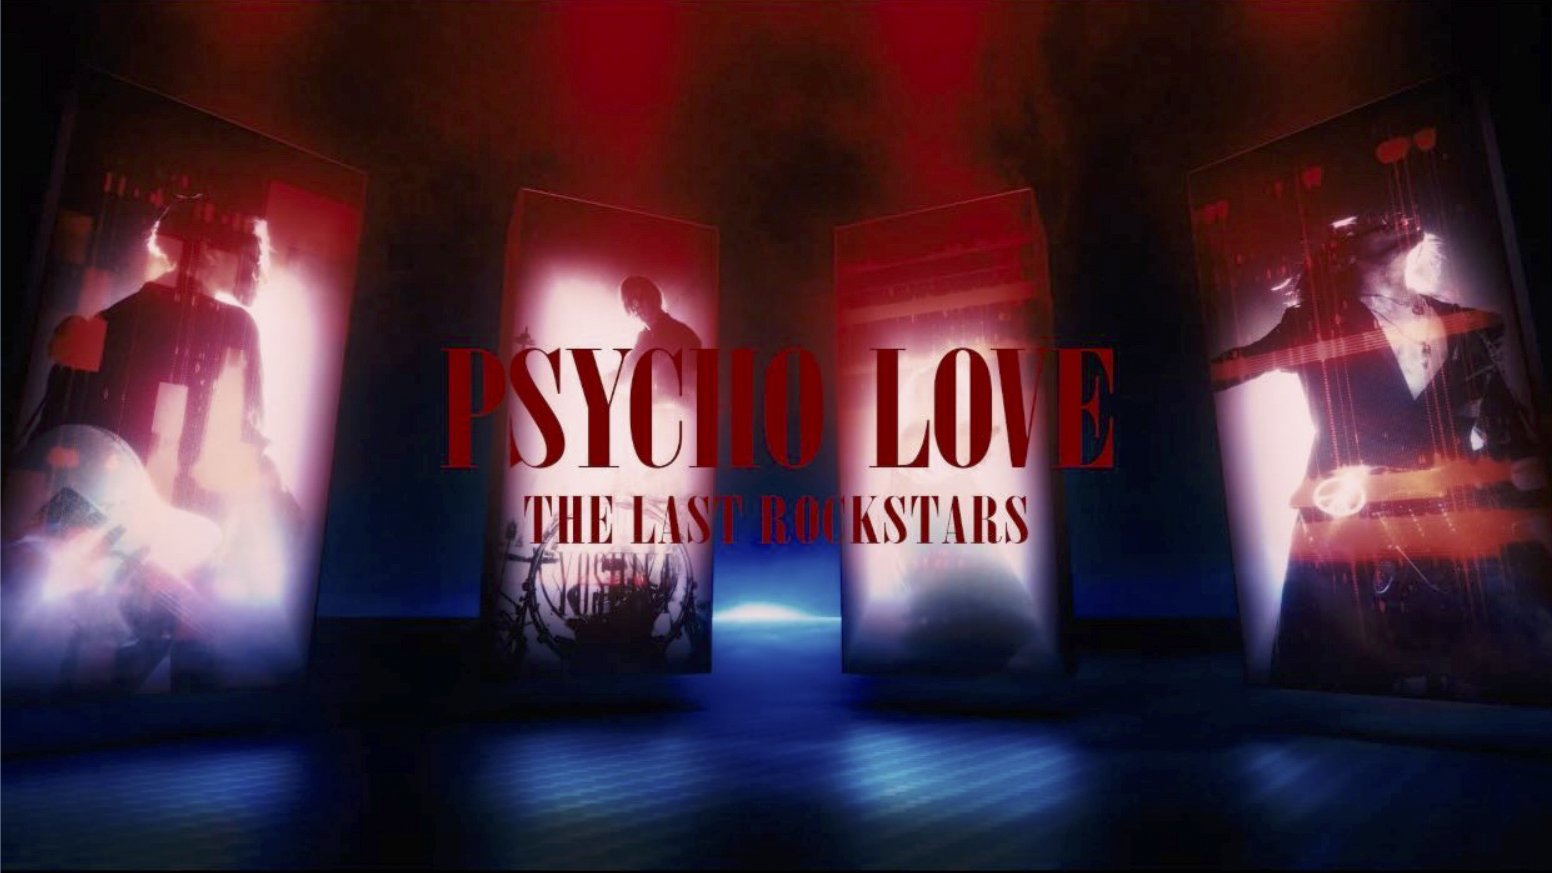 PSYCHOLOVE teaser <br>Music Video for THE LAST ROCK STARS